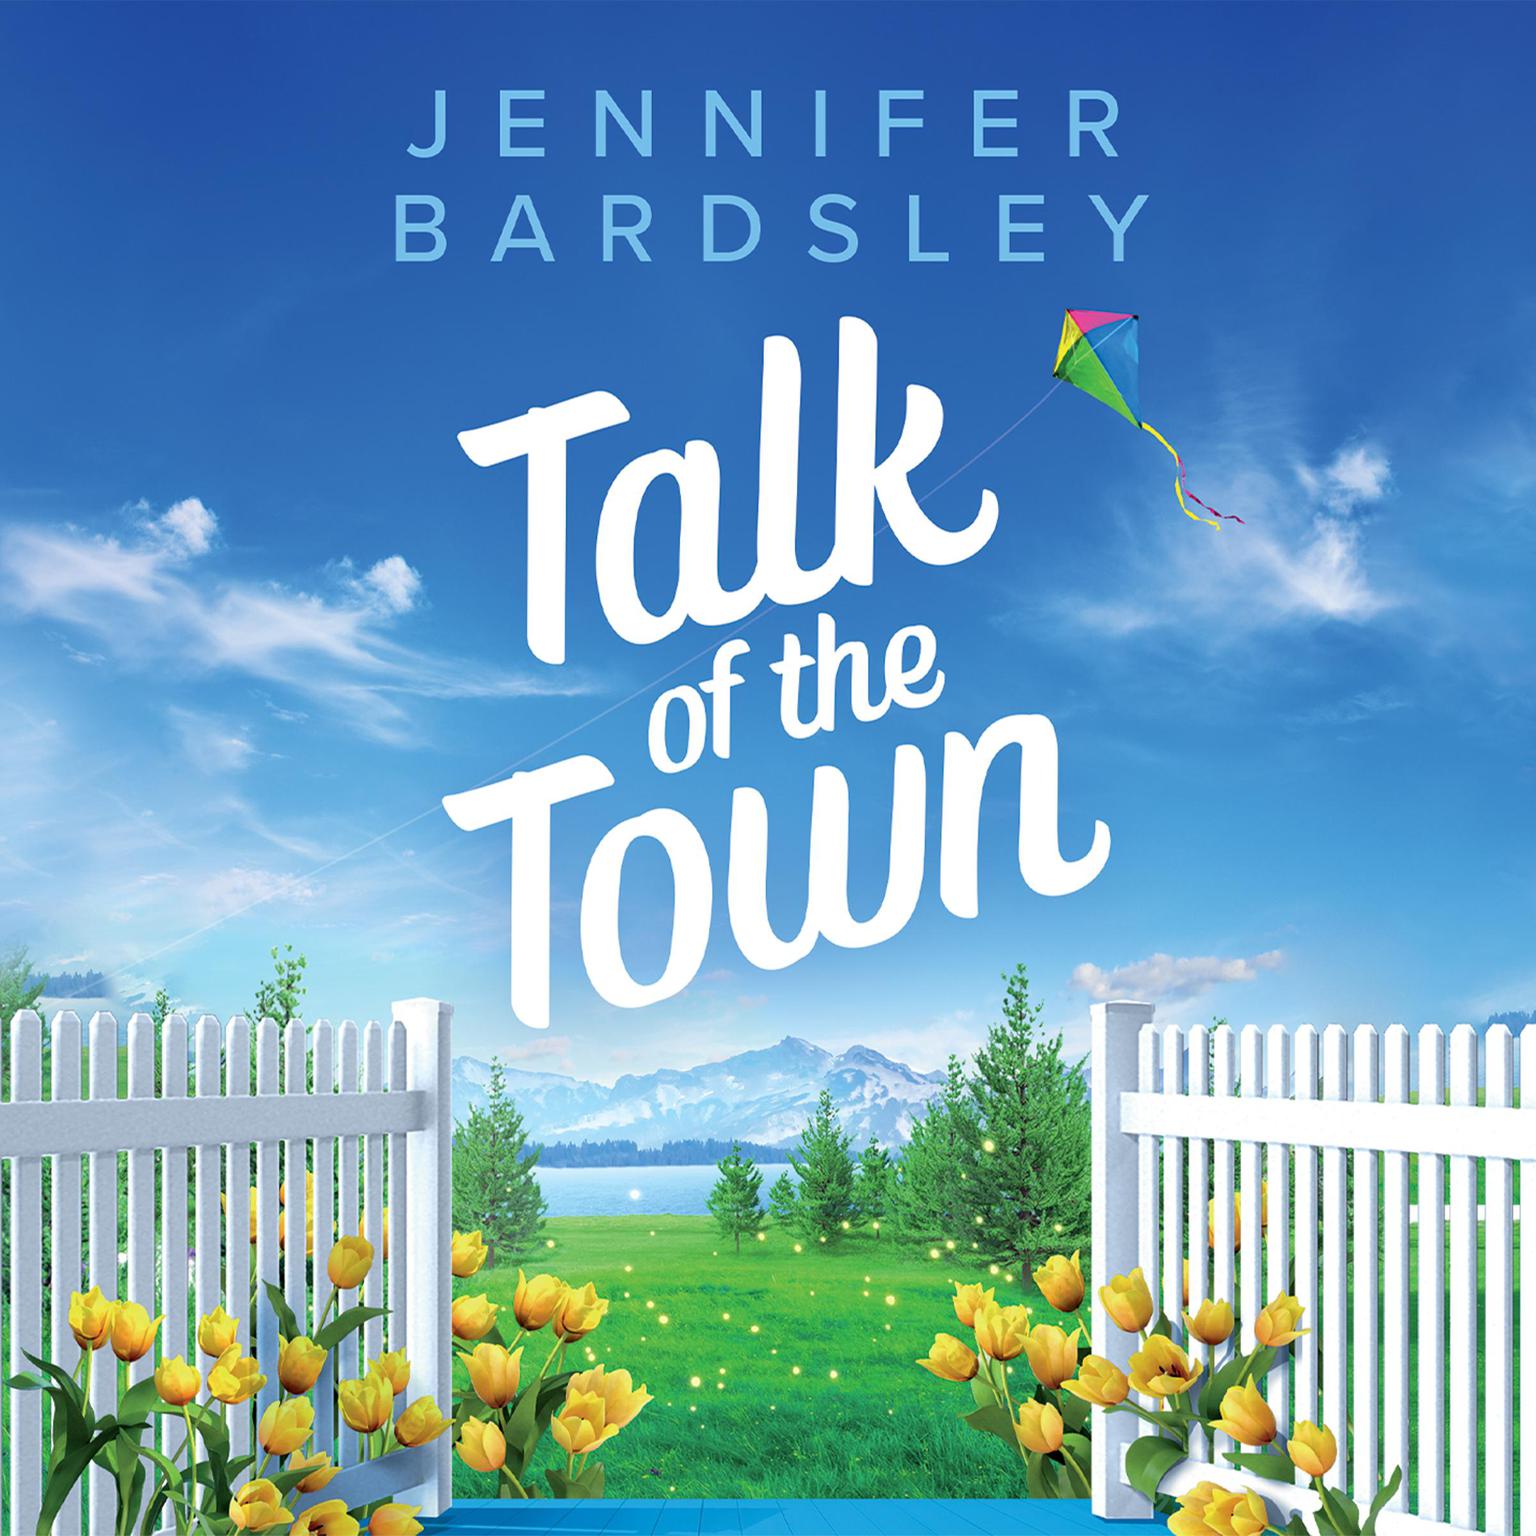 Talk of the Town Audiobook, by Jennifer Bardsley